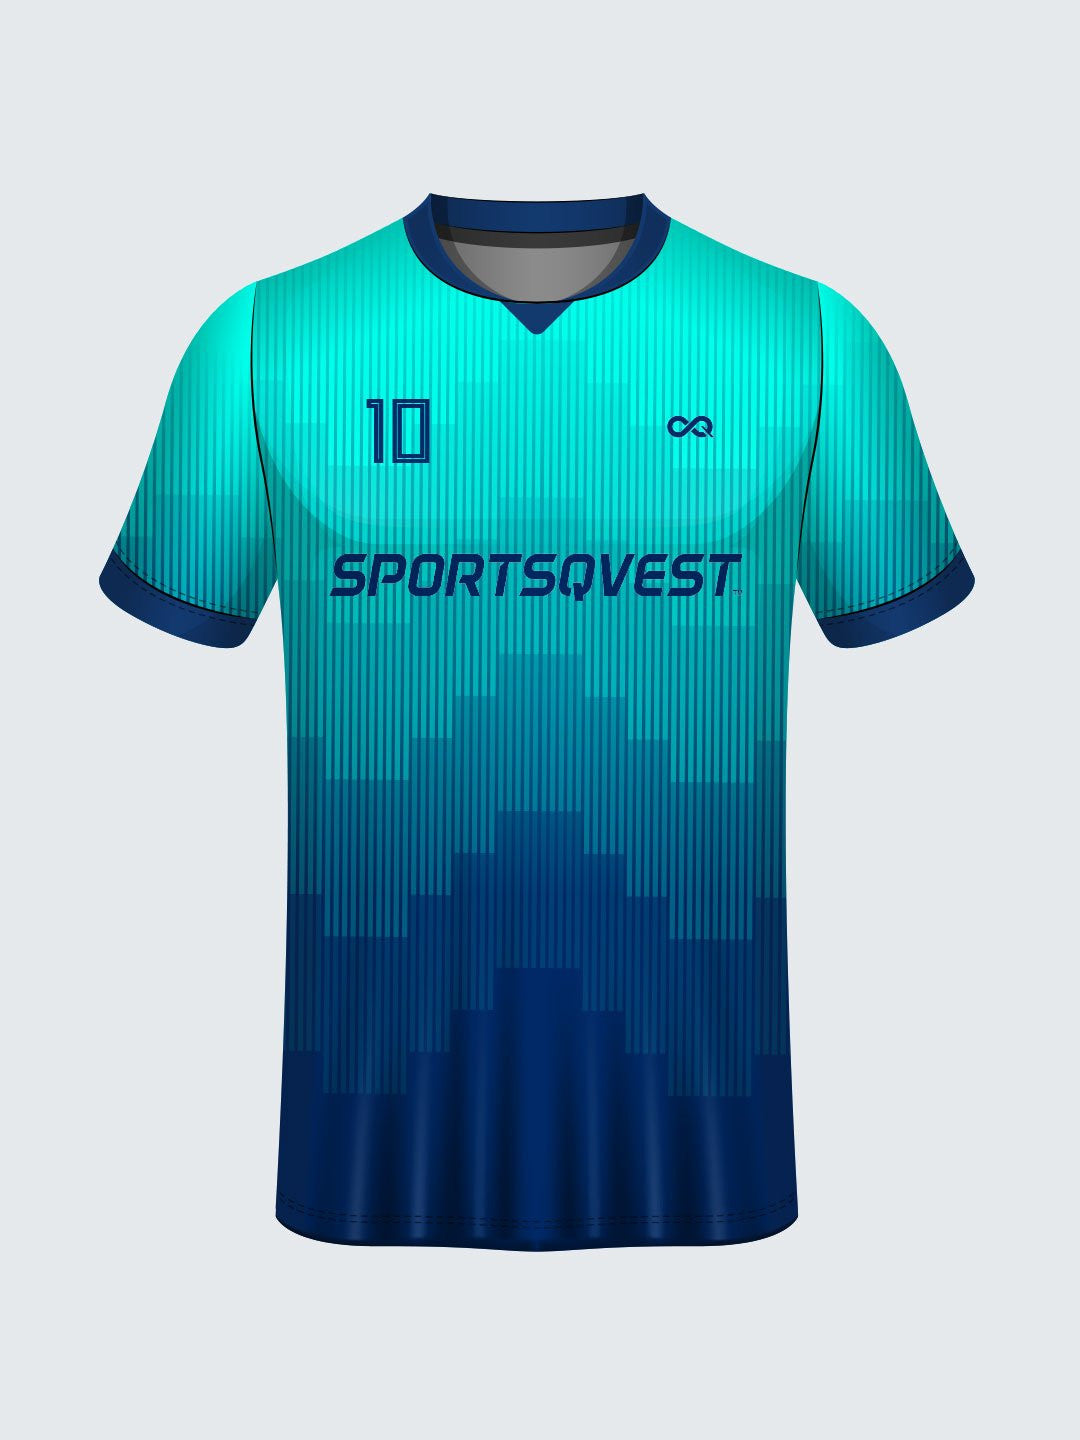 jersey design for cricket team